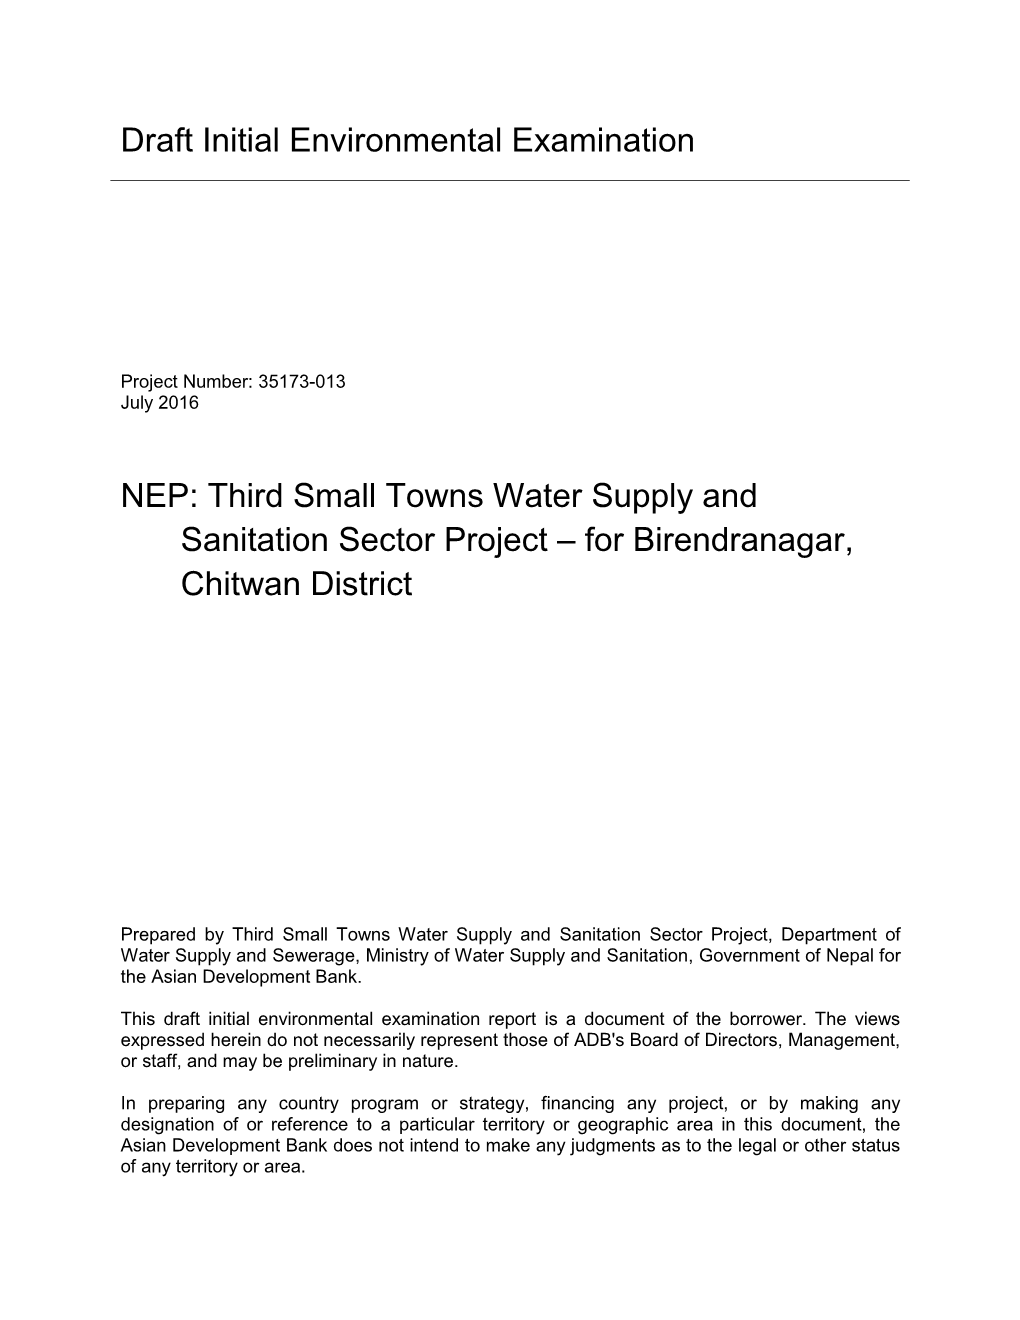 Draft Initial Environmental Examination NEP: Third Small Towns Water Supply and Sanitation Sector Project – for Birendranagar